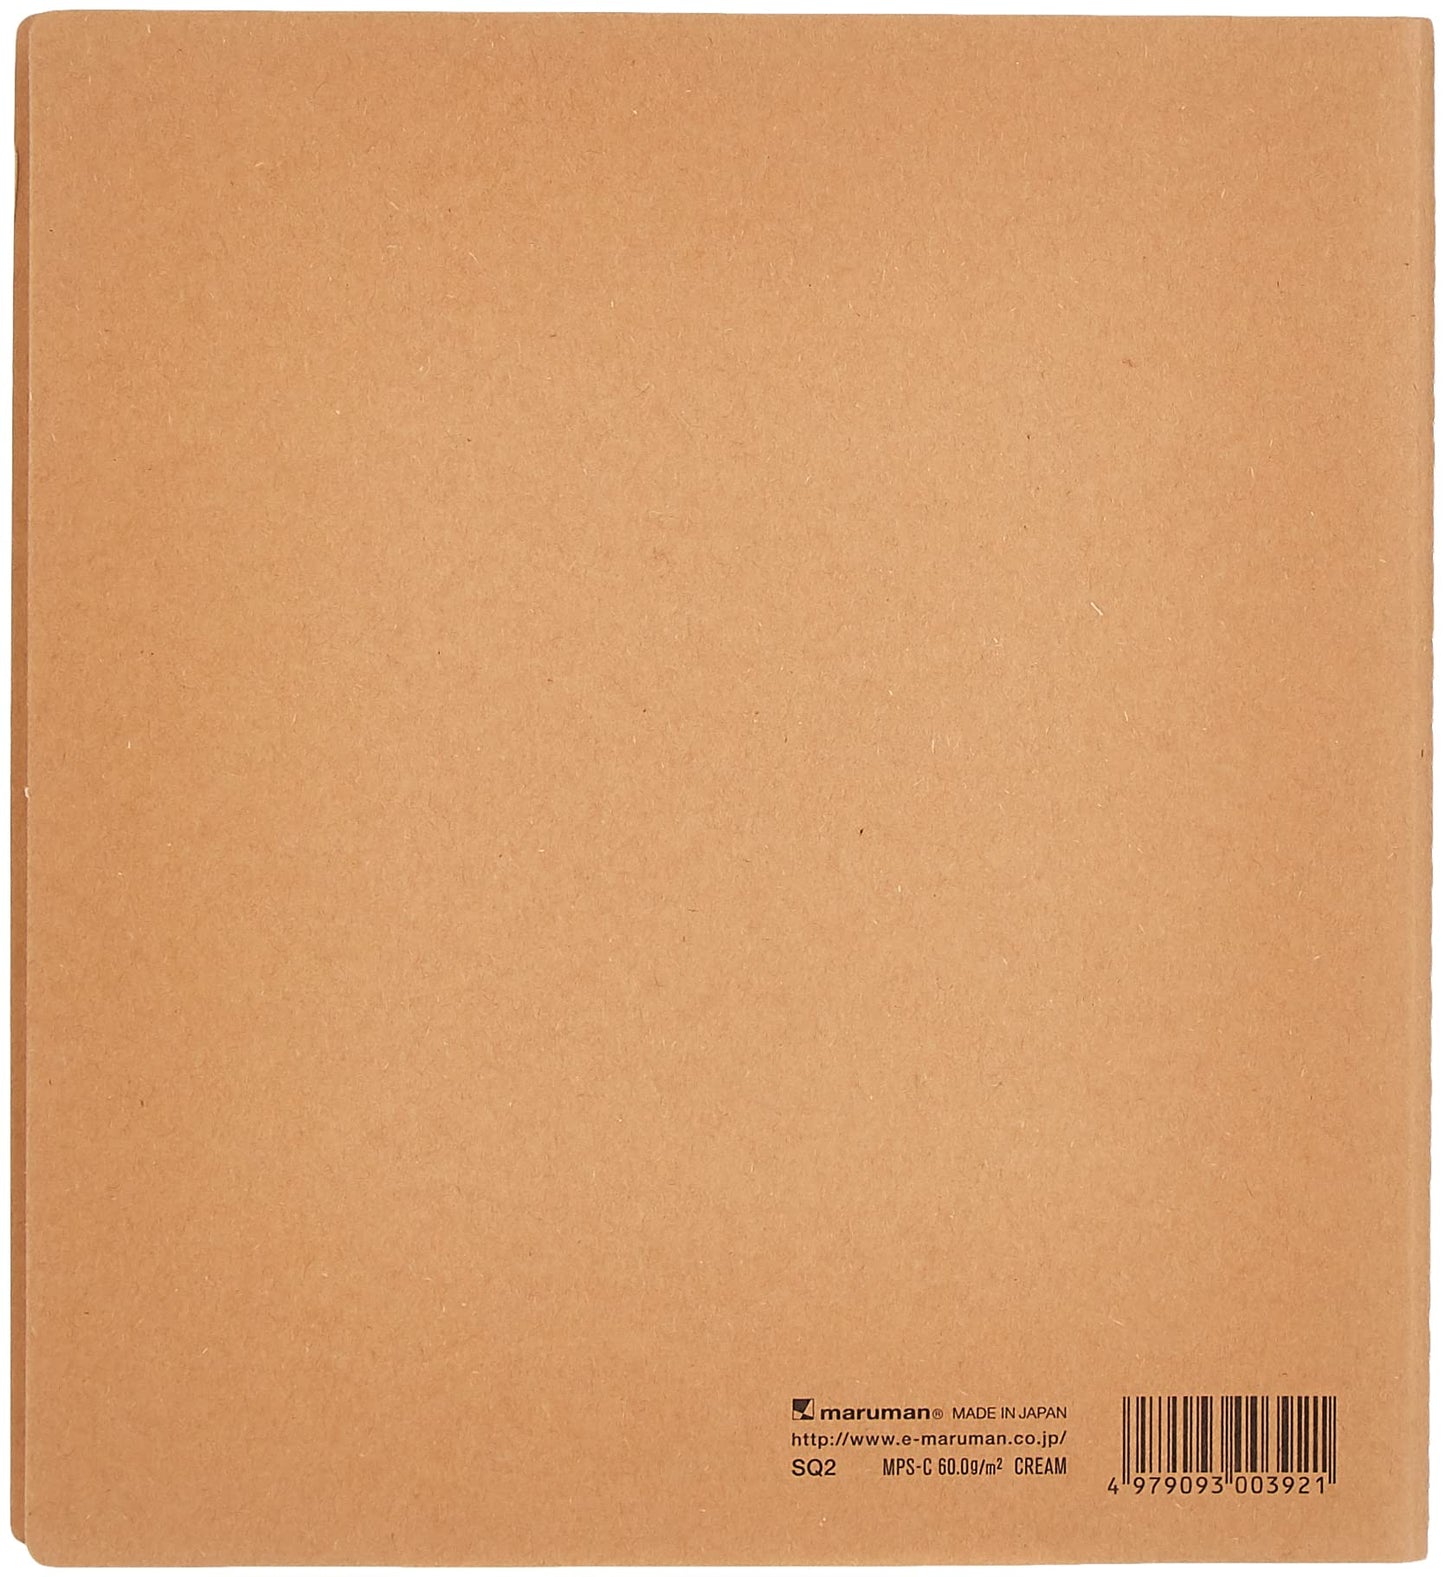 Maruman Premium Quality Drawing Pad And Book (Sq2)